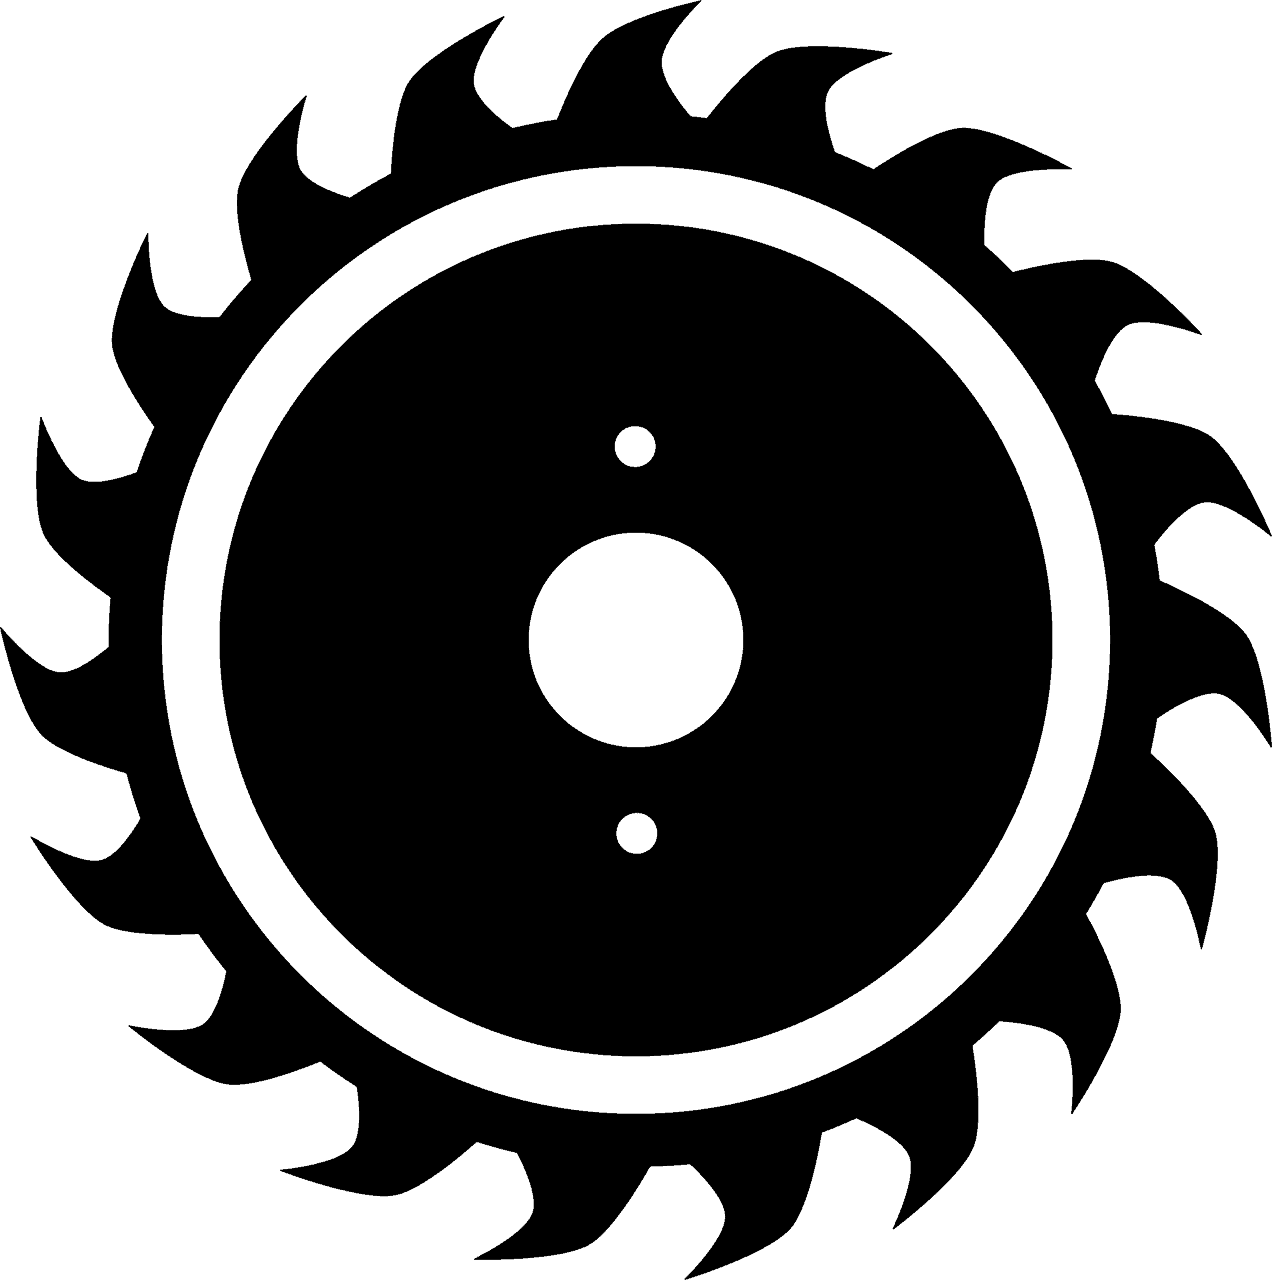 Rotorazer and circular saw blade